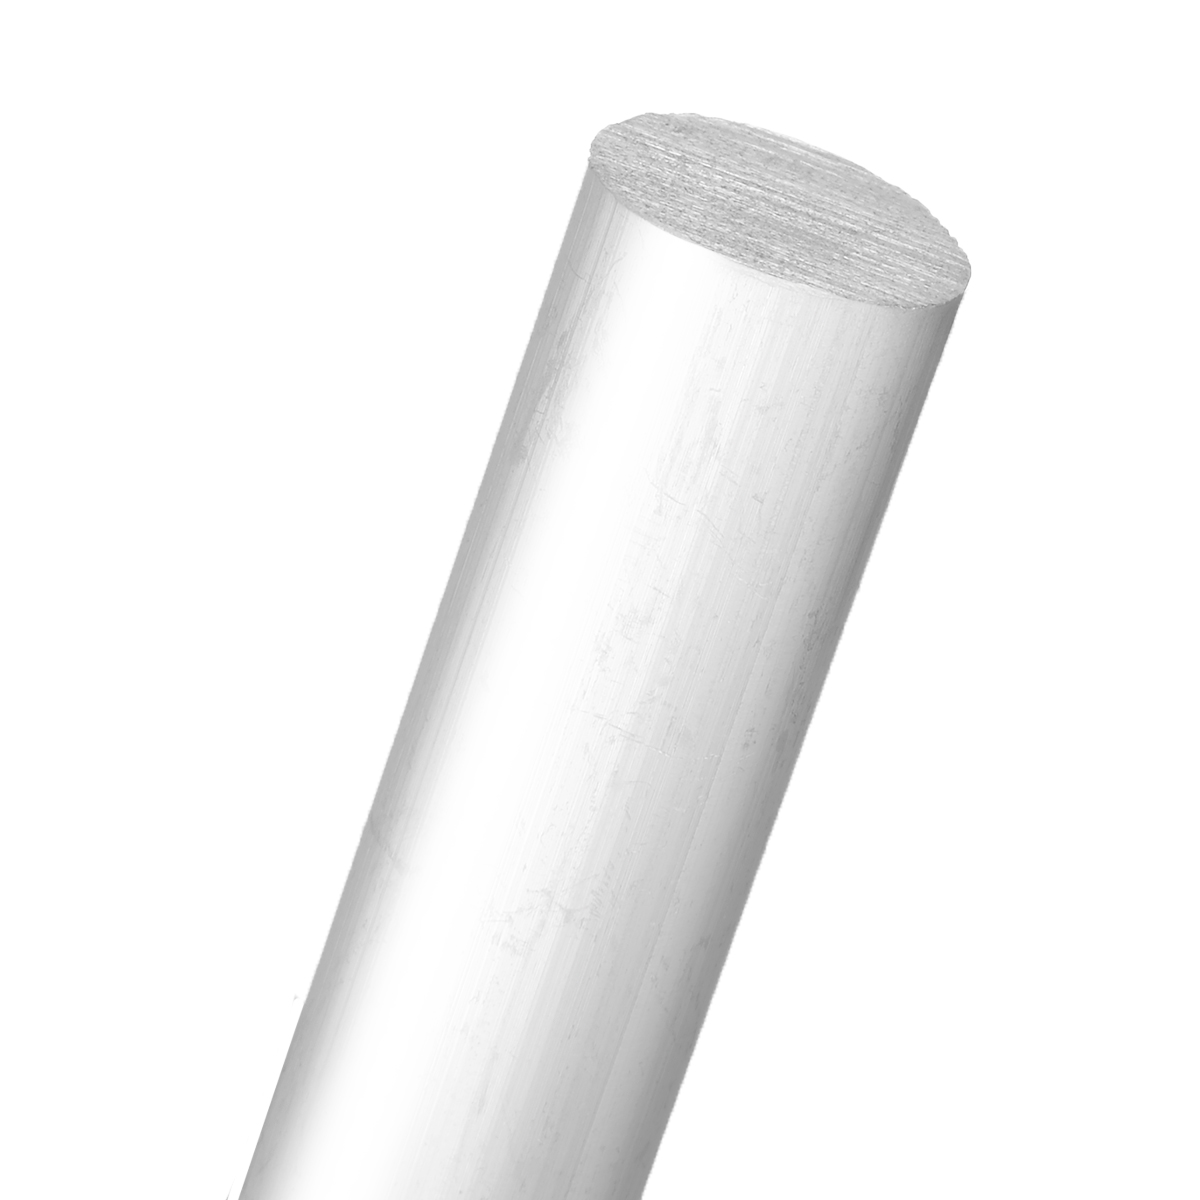 16mm x 9cm Magnesium Rod Bar High Purity 99.99% Aluminum Metal Rod for Welding Soldering Magnesium Bar Survival Emergency Tools